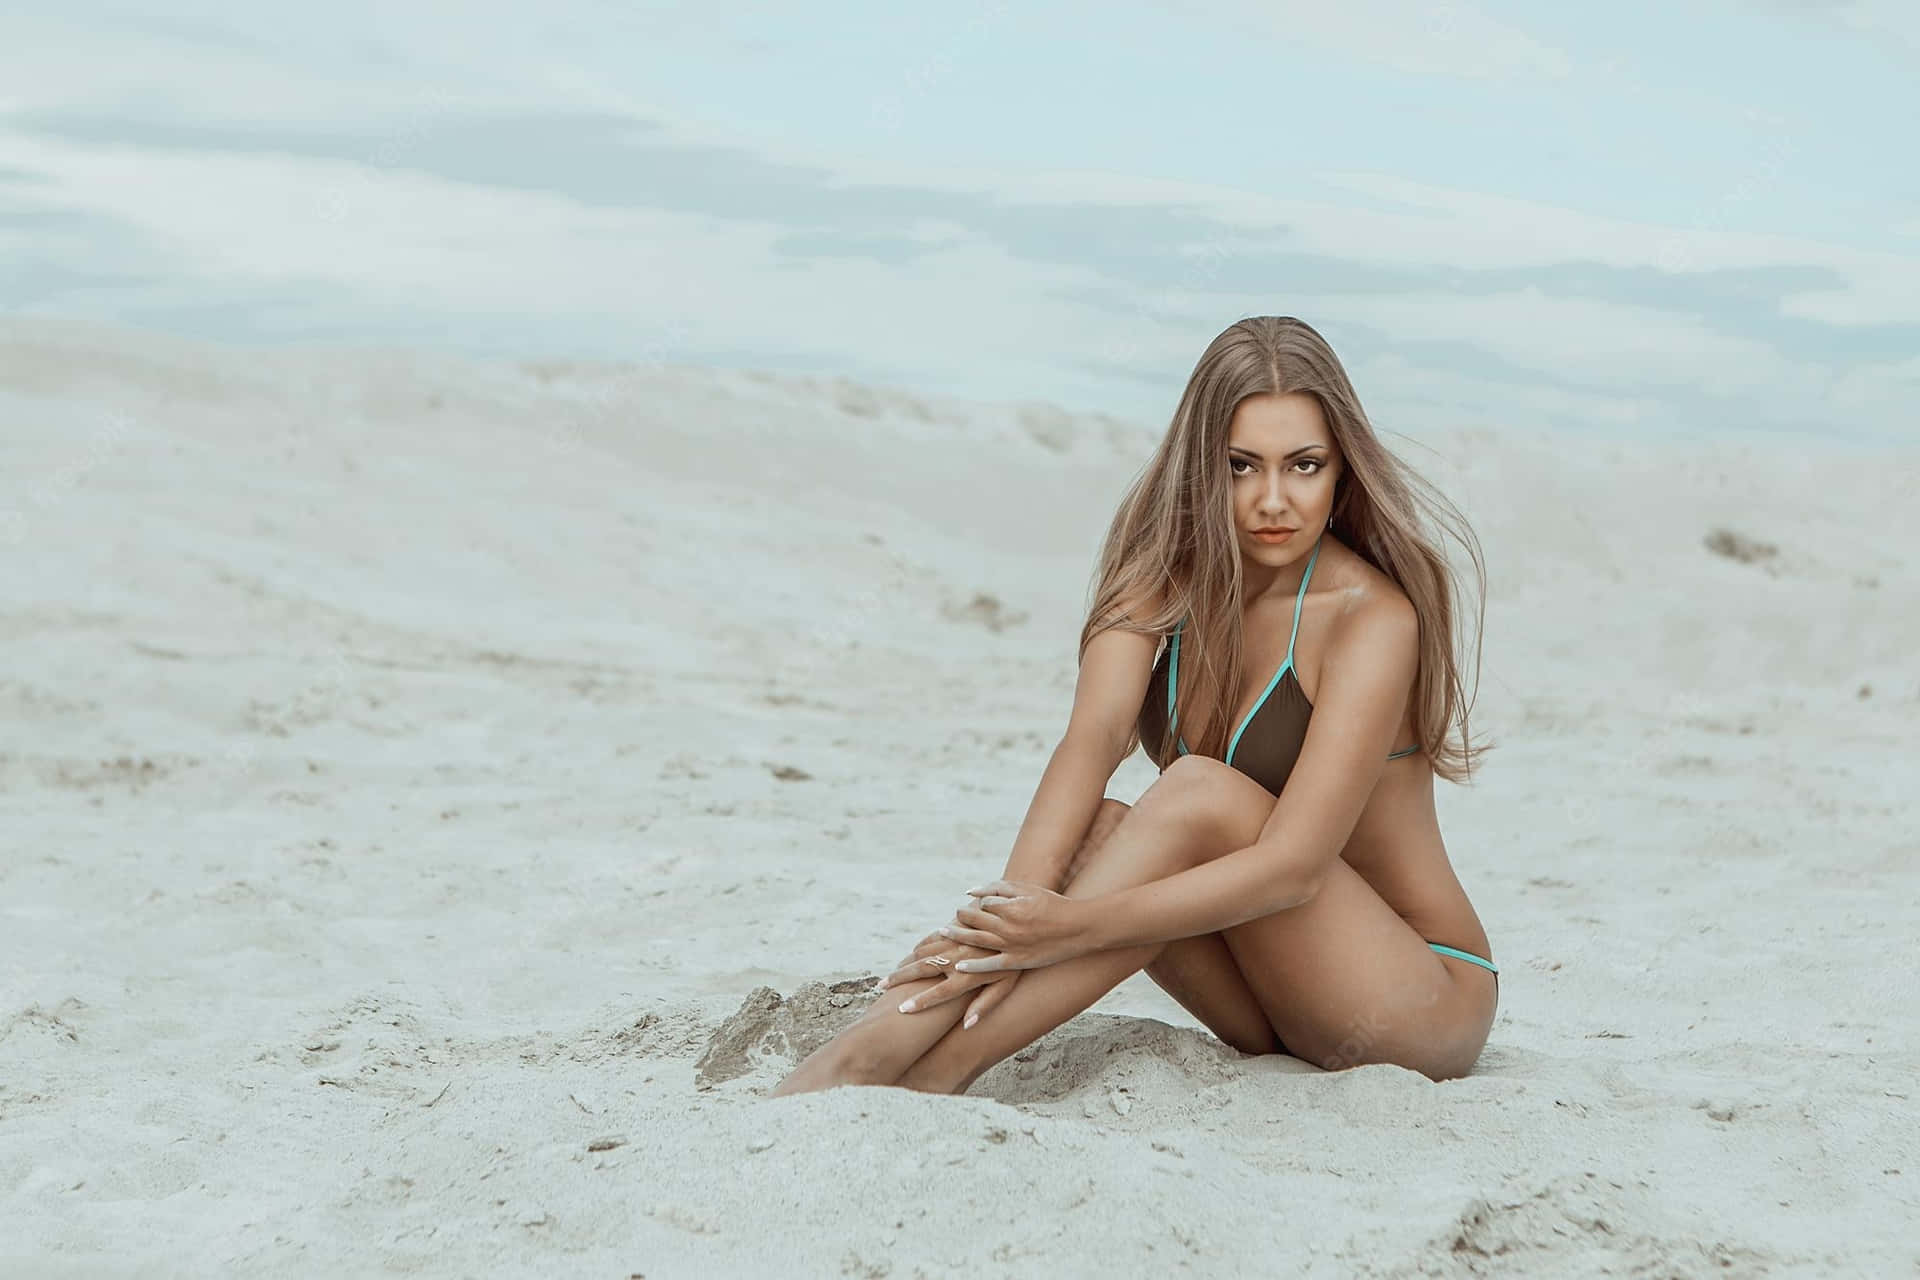 Sexy Beach Model Pose On White Sand Wallpaper